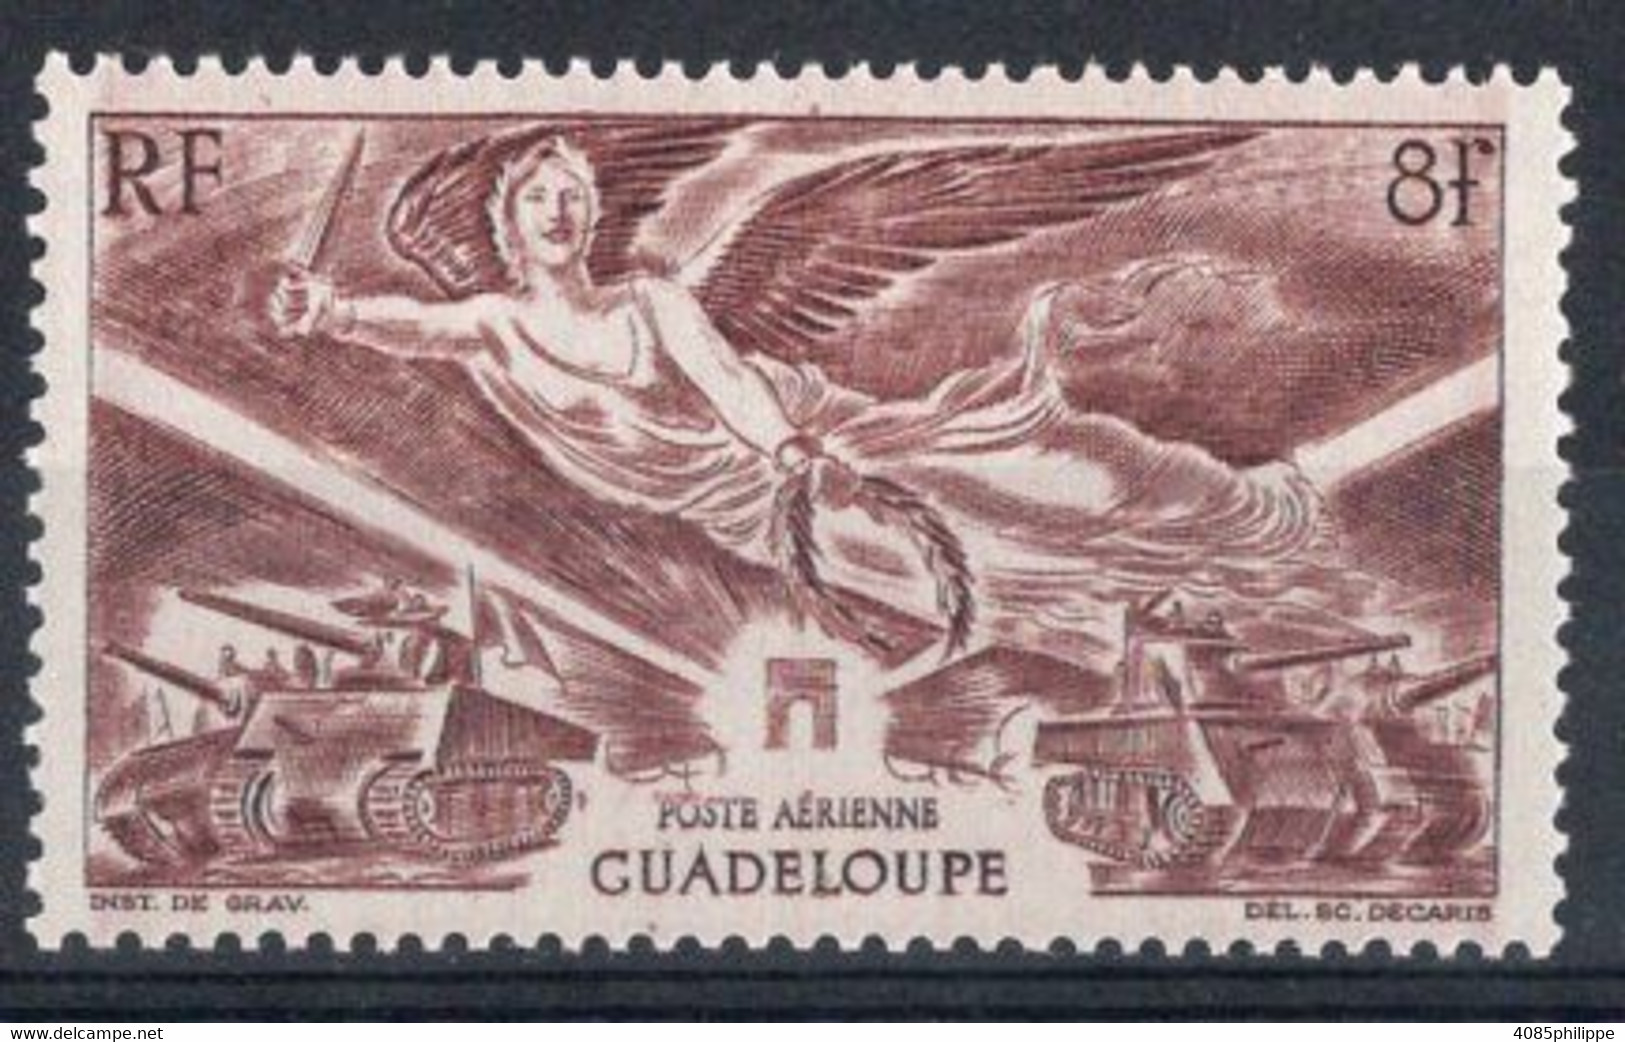 Guadeloupe Timbre-poste Aérienne N°6* Neuf Charnière TB Cote 1€25 - Airmail